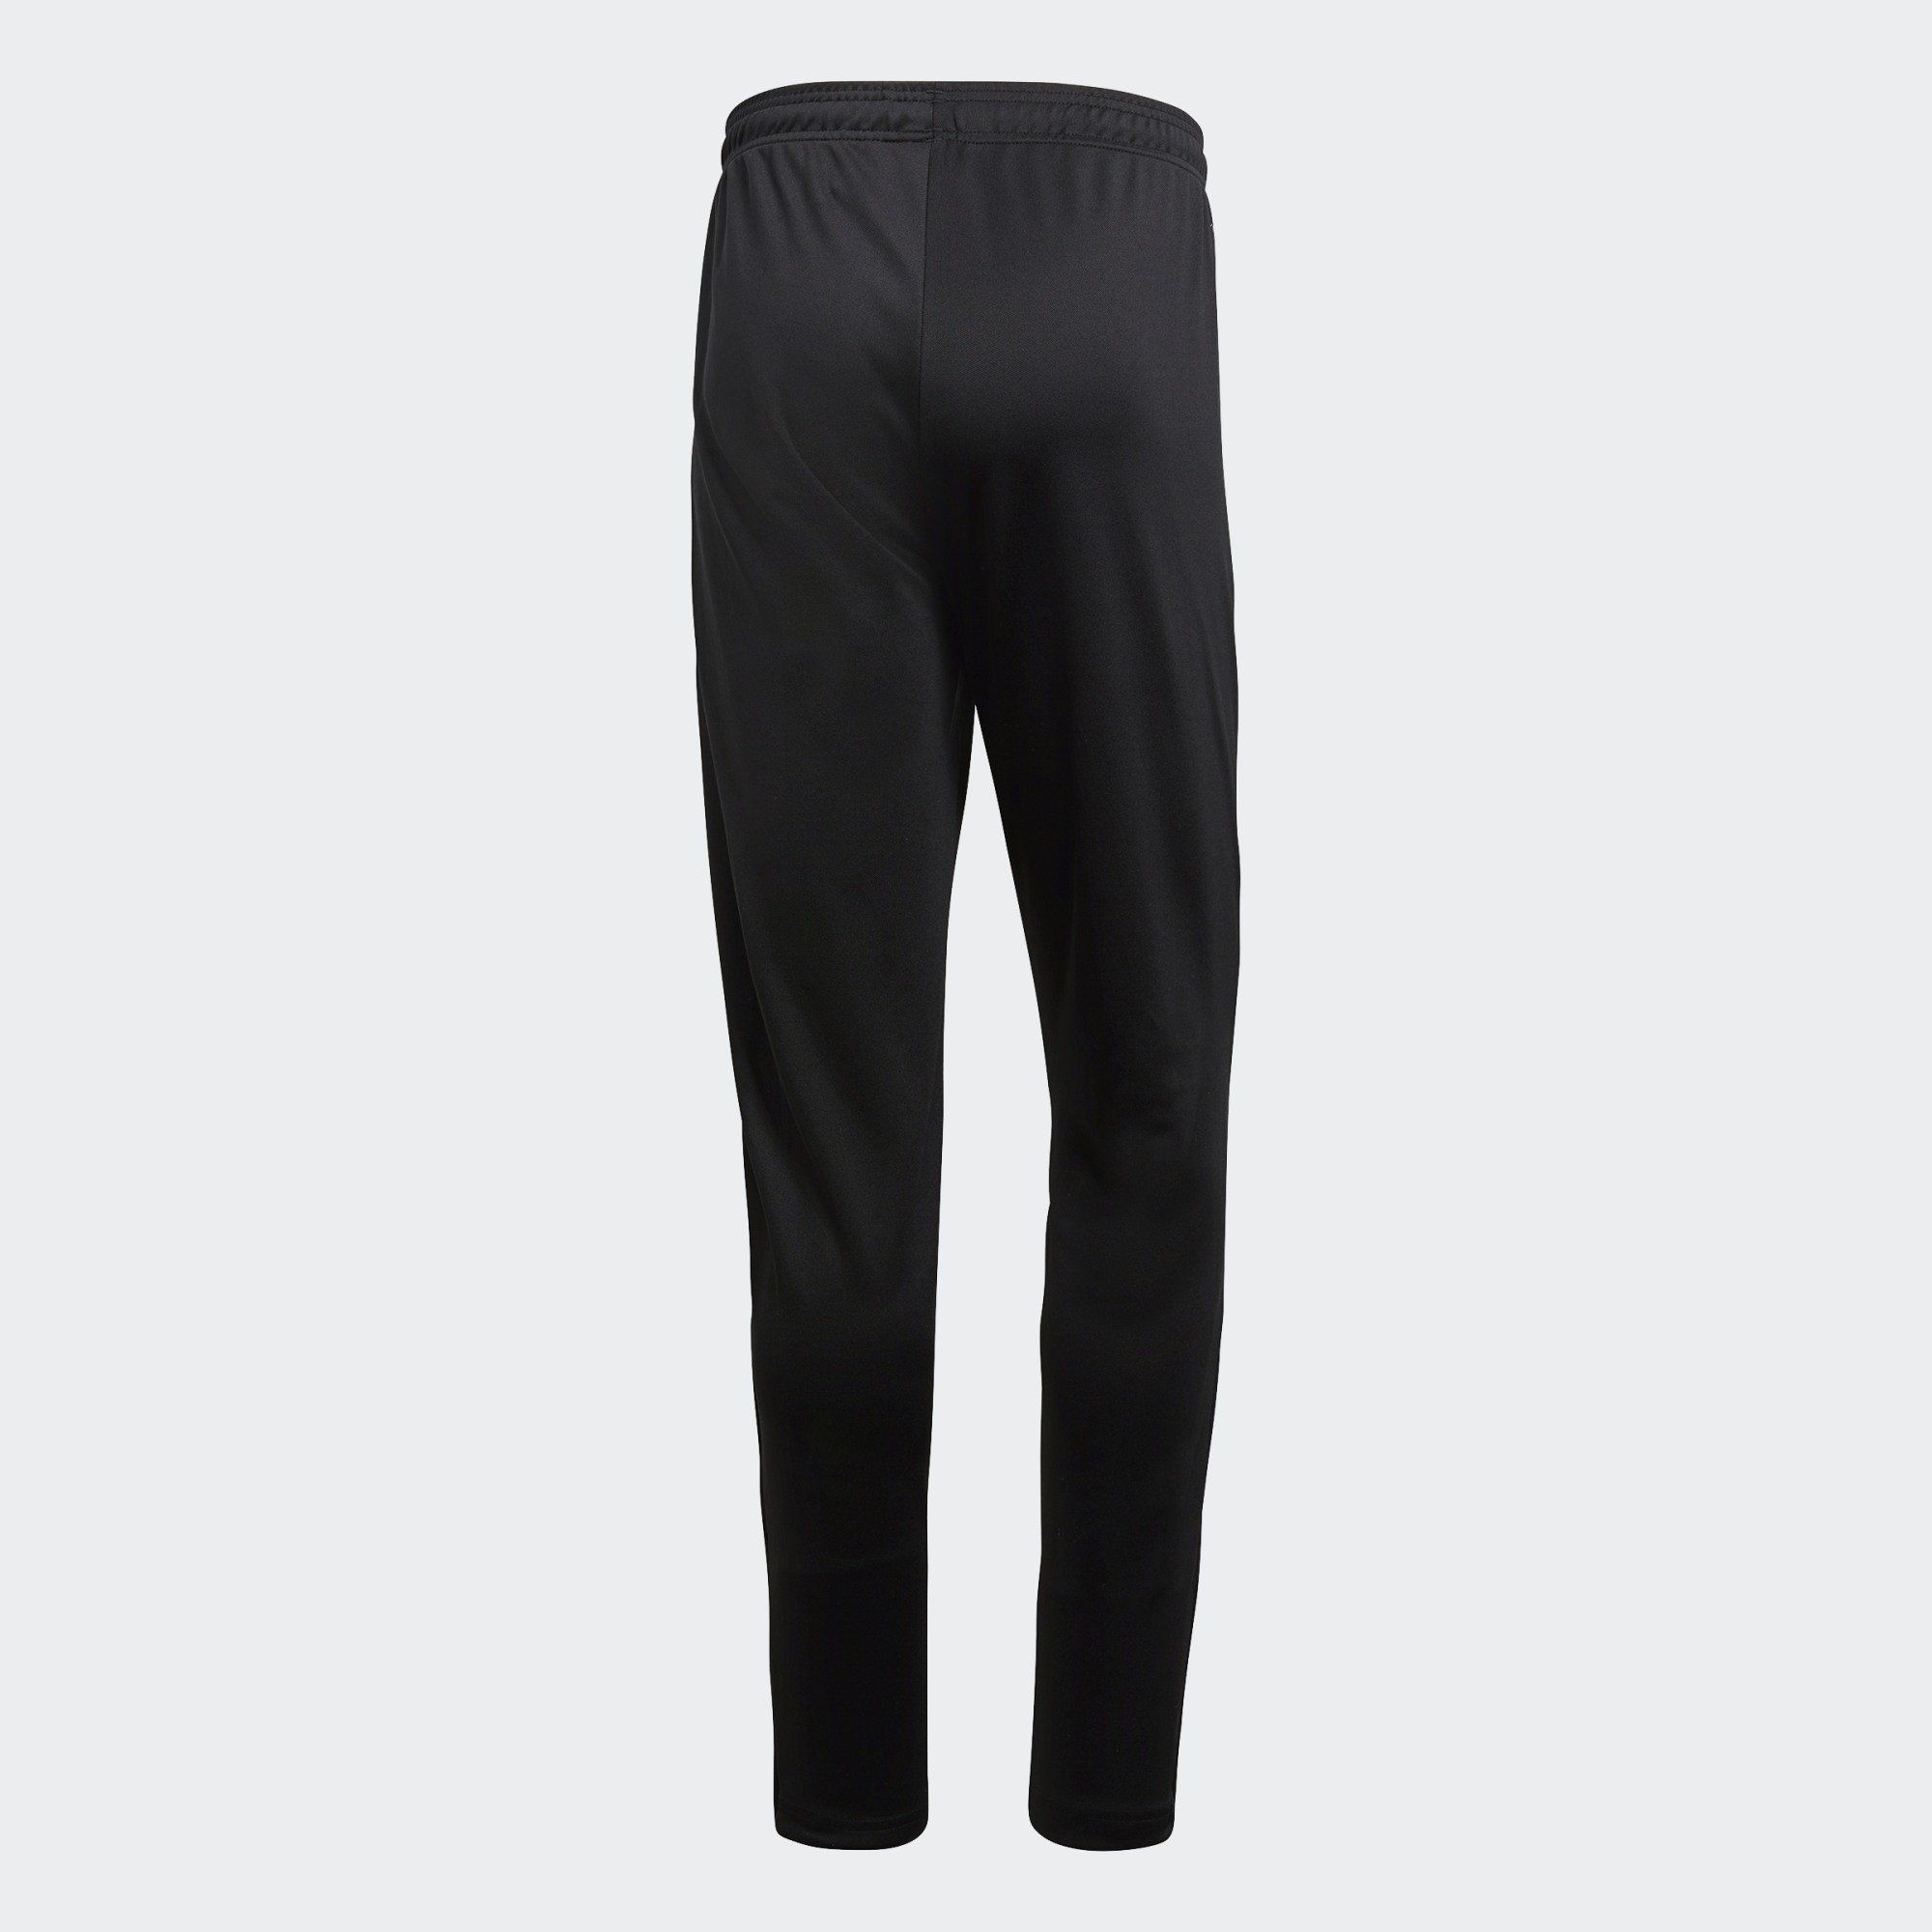 Adidas Mens Tracksuit Pants Jogger Sweatpants Trackie Bottoms Black | eBay